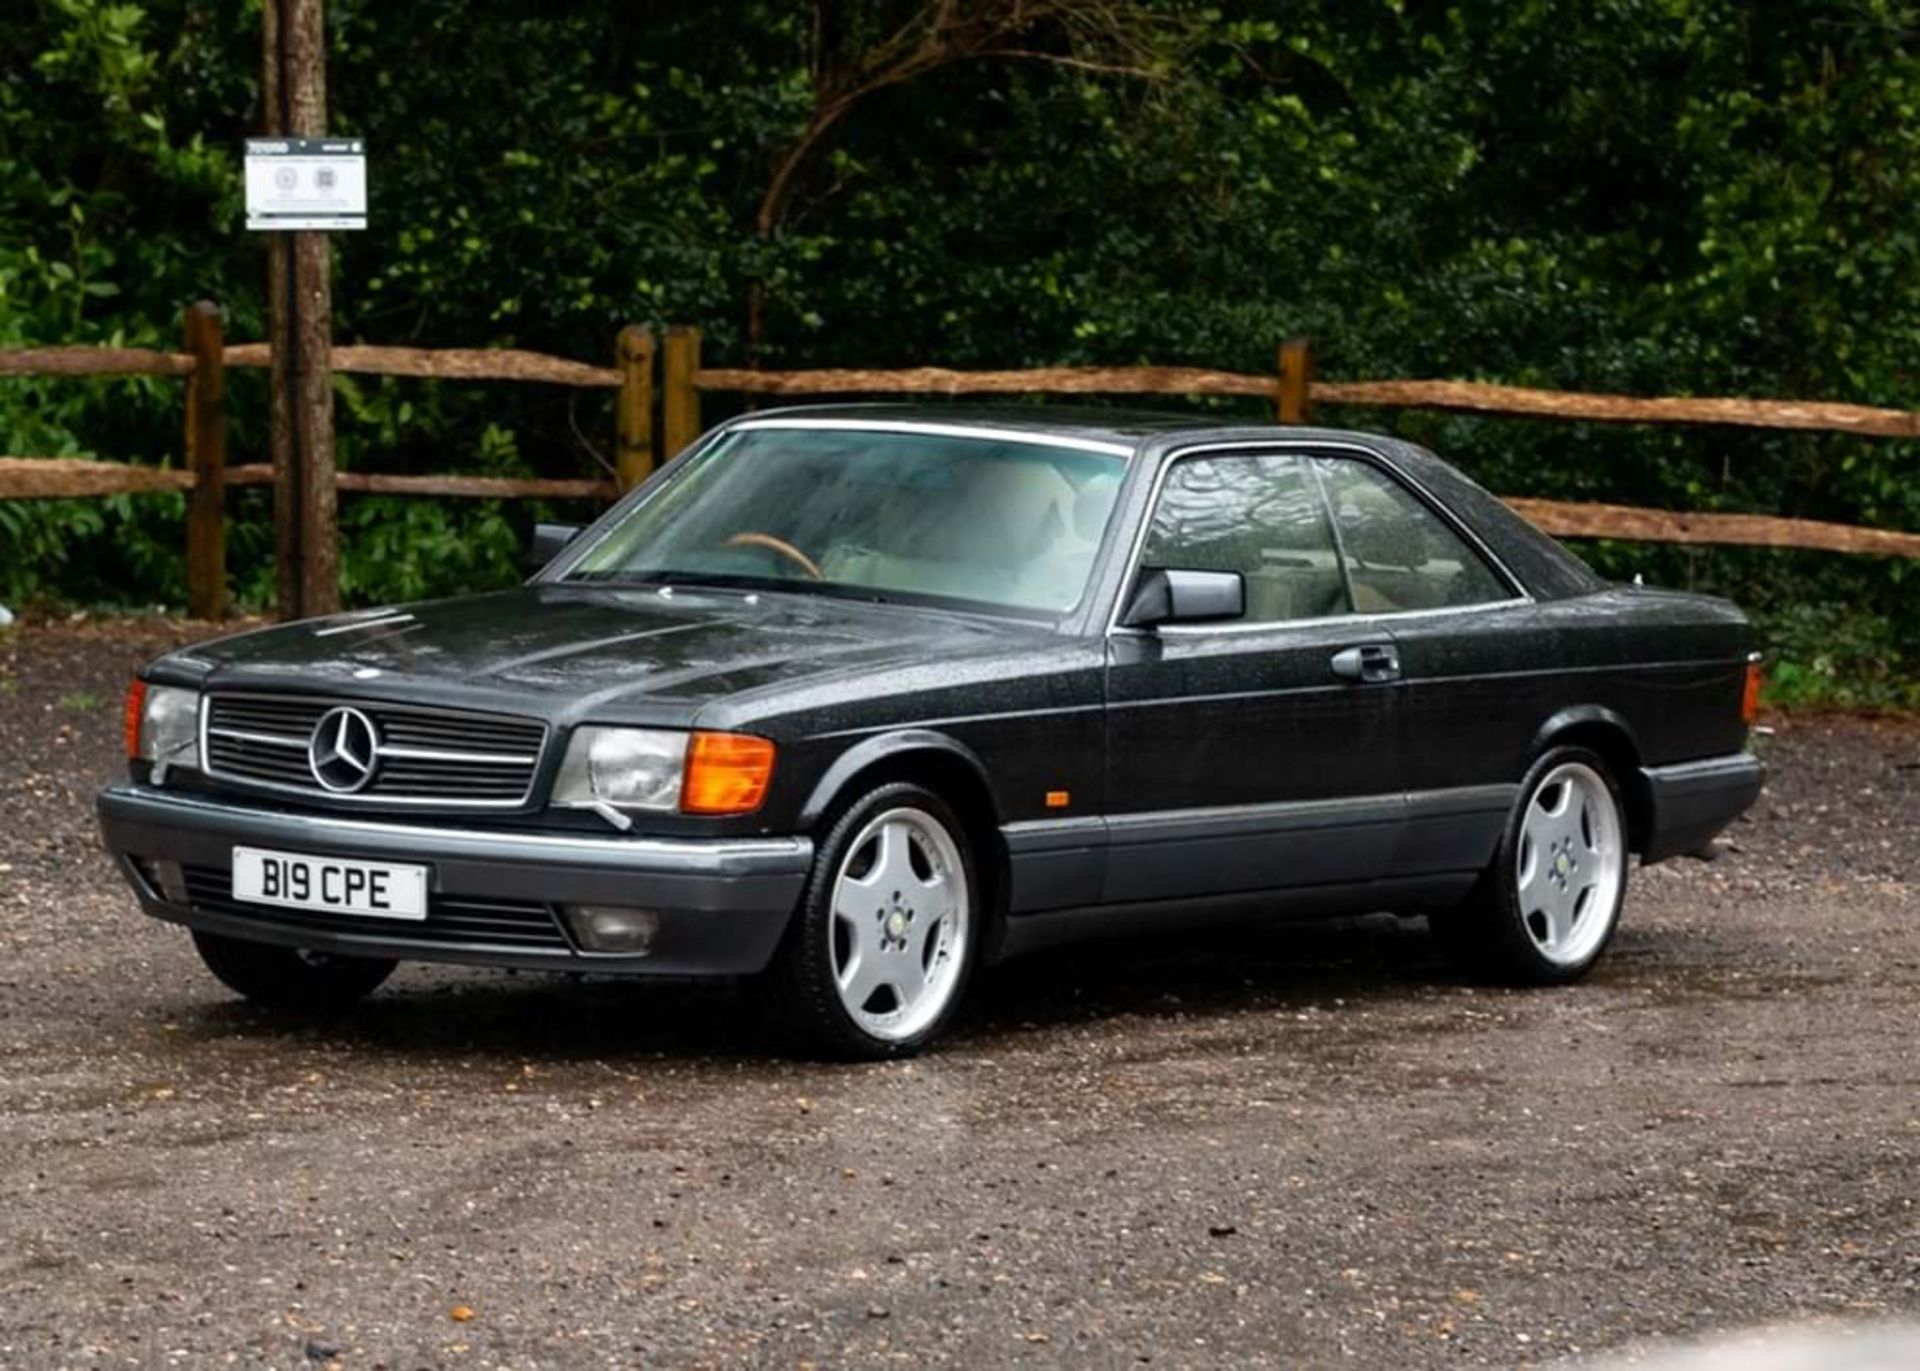 1989 Mercedes-Benz 500SEC €œFrom the Cheesbrough Collection€ - Image 6 of 8